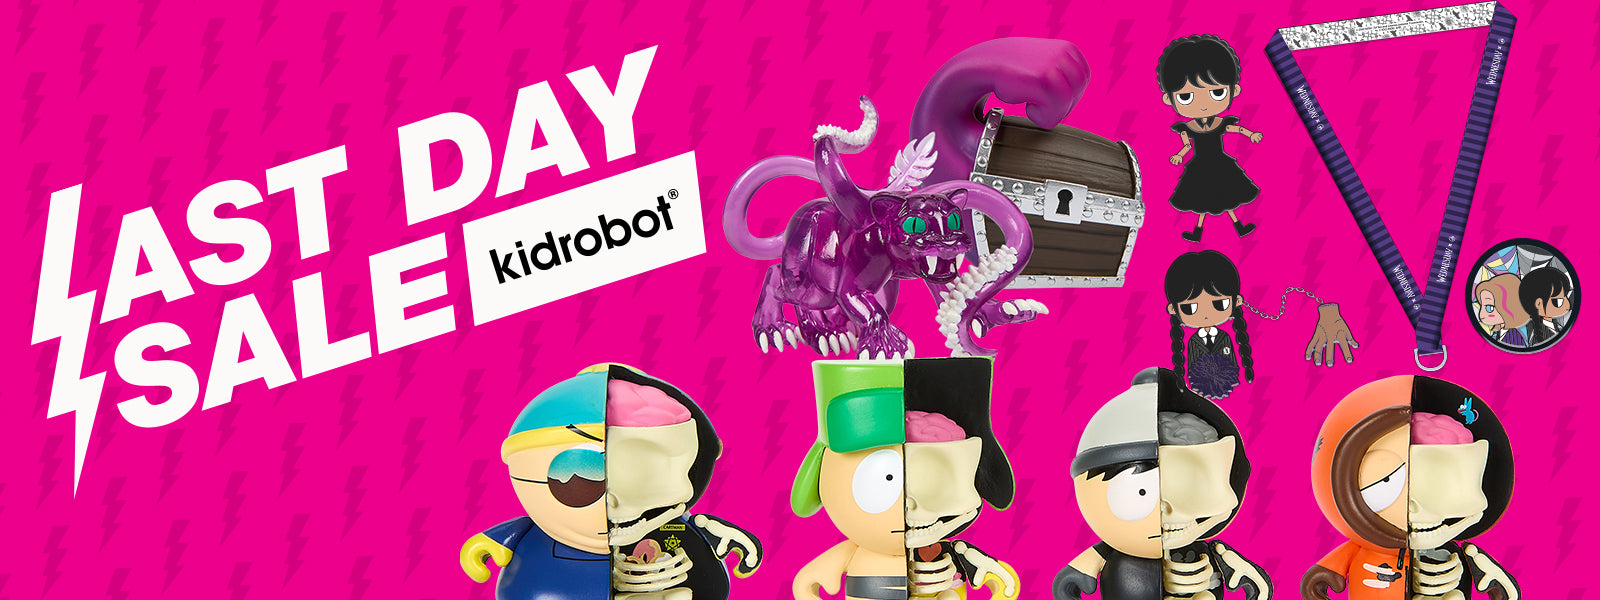 Last Day Sale Kidrobot Comic Con Exclusives